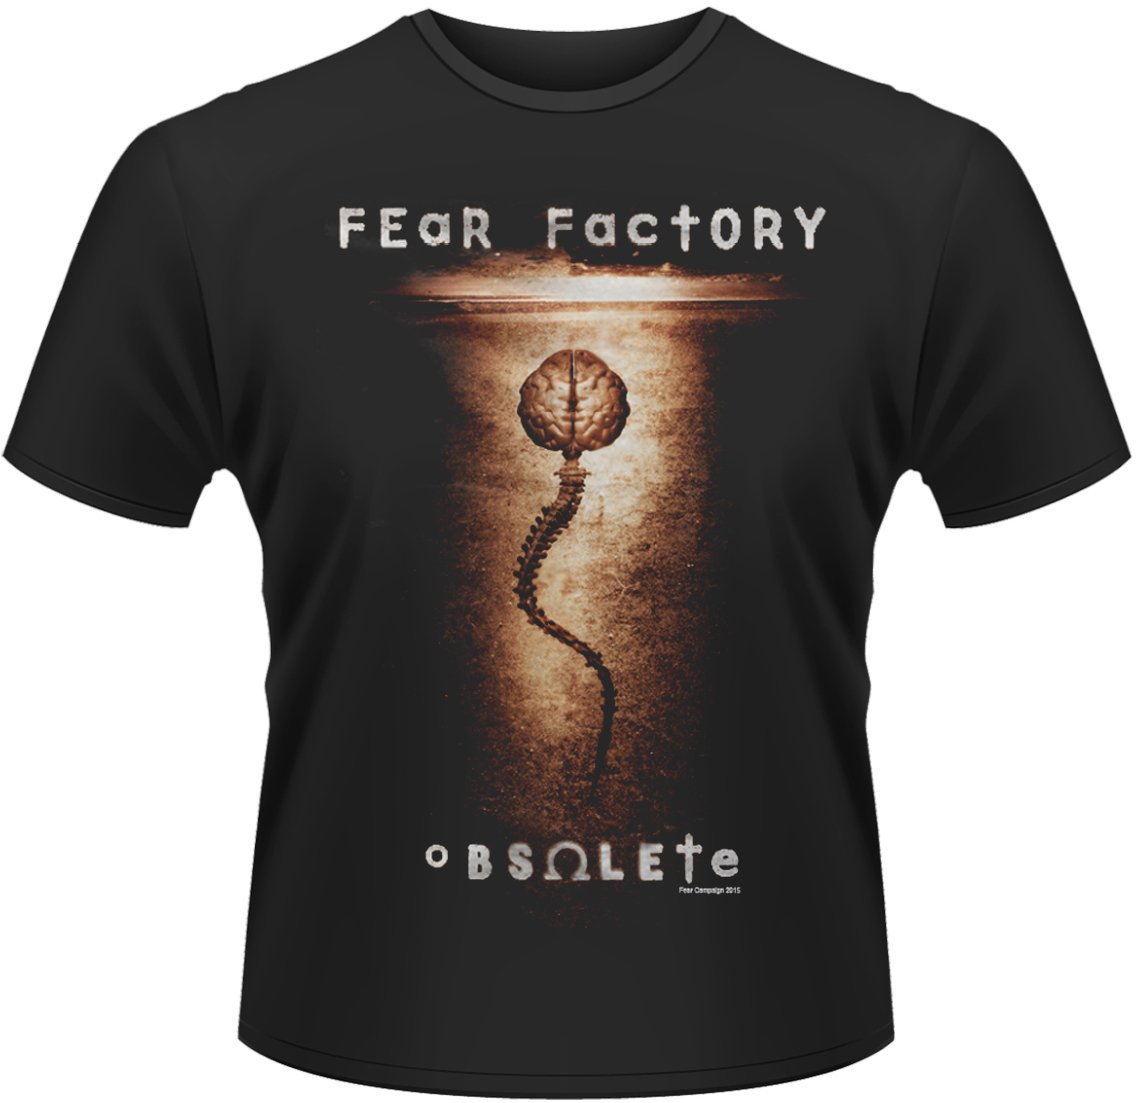 T-shirt Fear Factory T-shirt Obsolete Masculino Black M